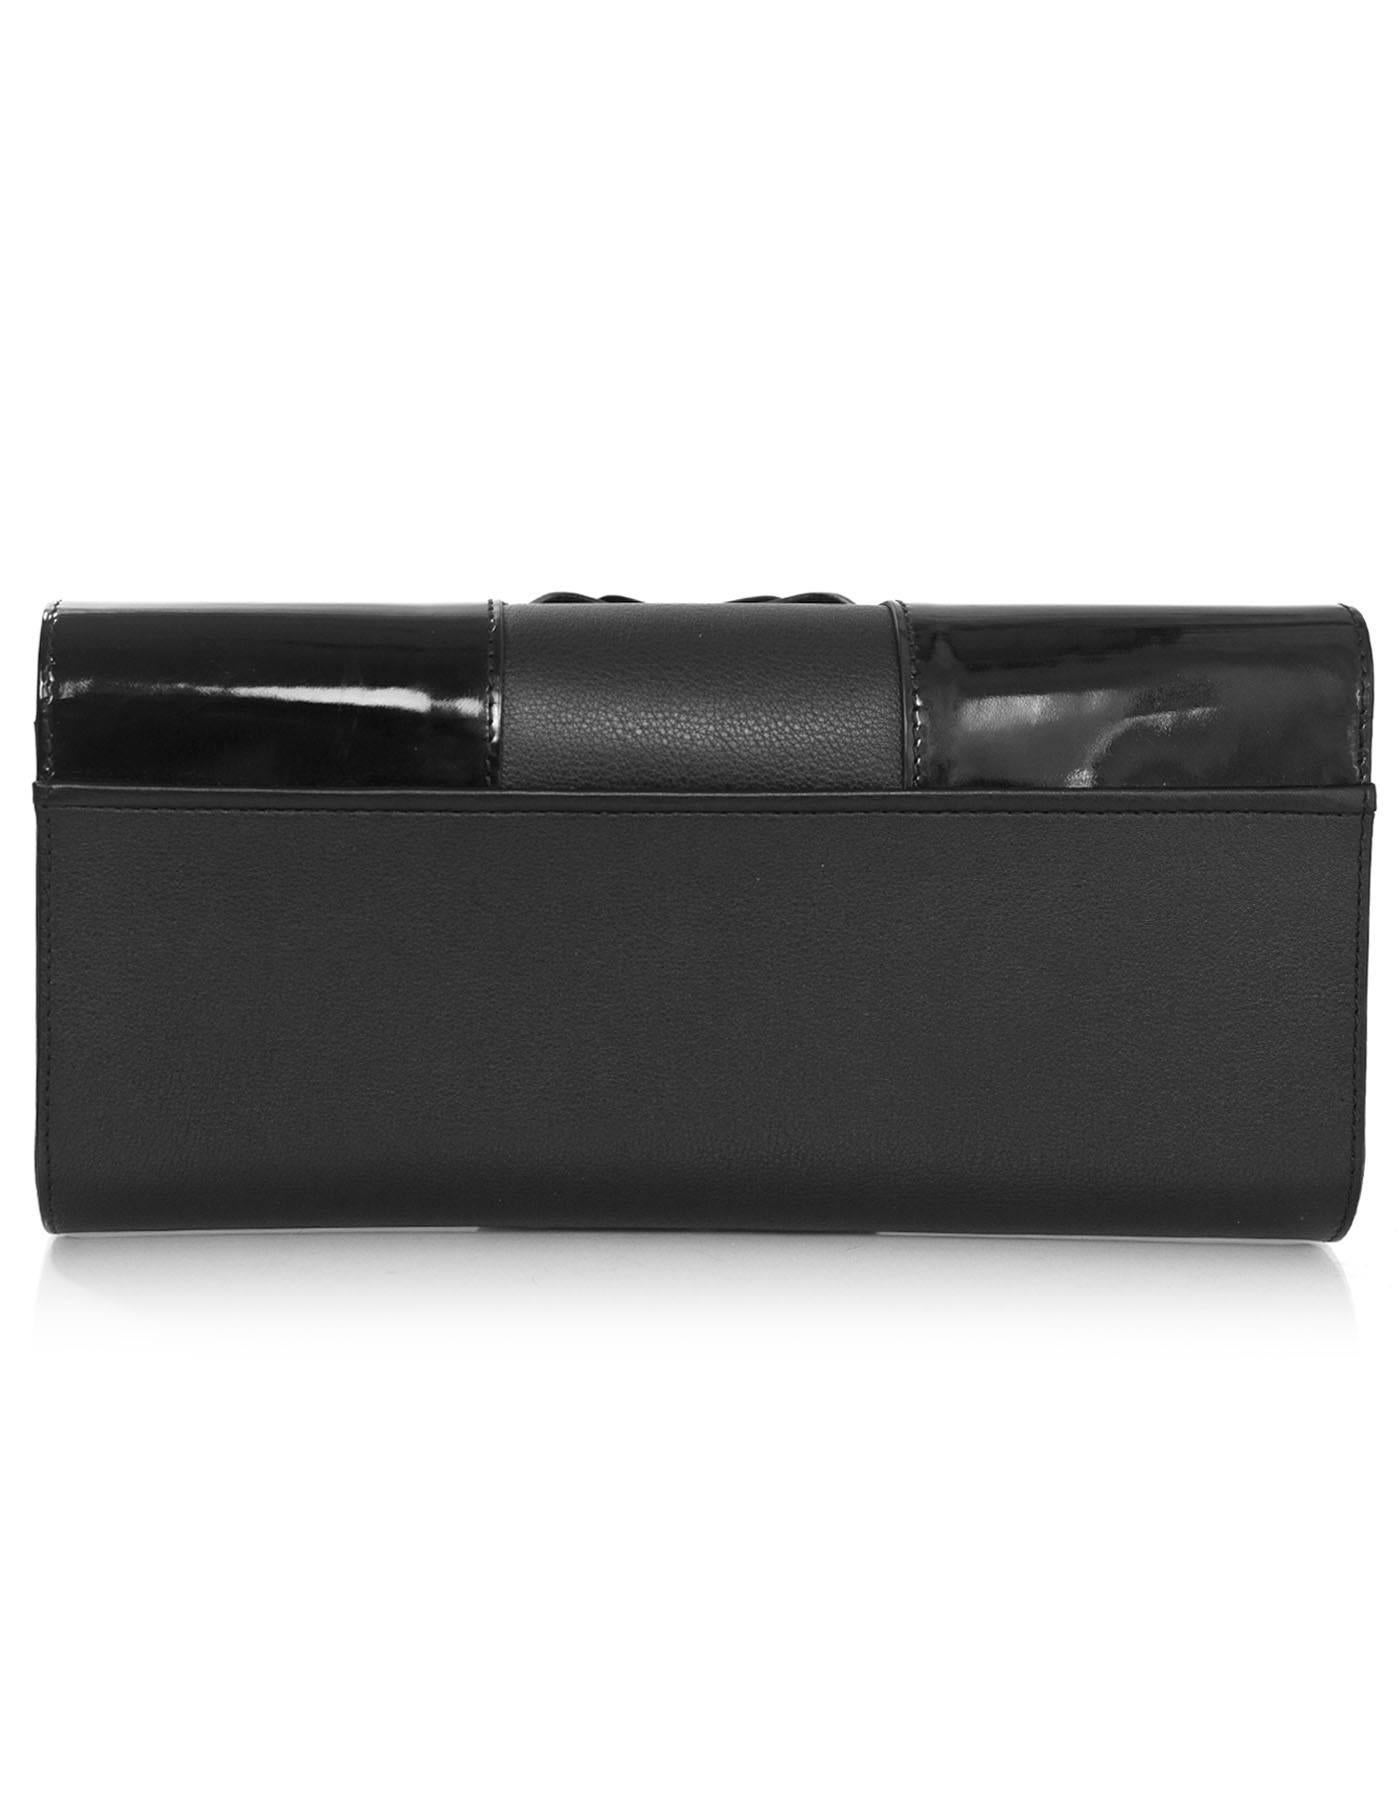 Perrin Black Patent & Calf Leather Le Cabriolet Glove Clutch Bag  3